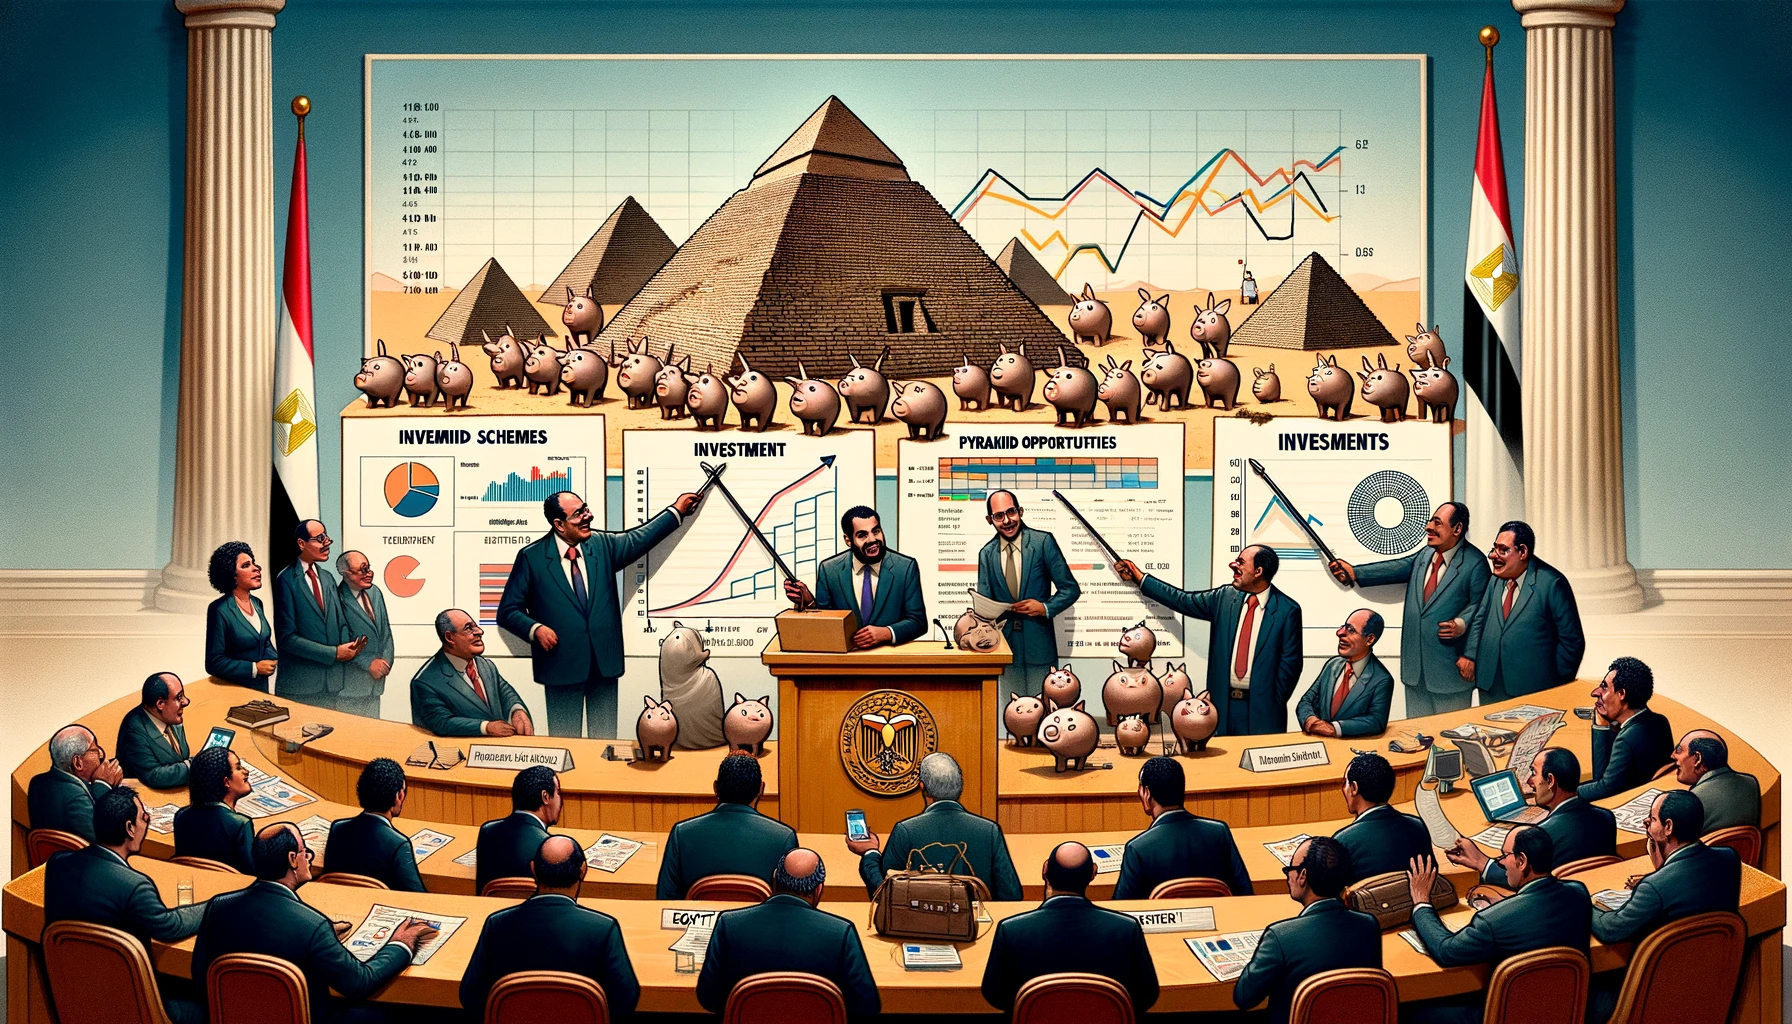 egypt-imf-pyramid-scheme-investment-csdn